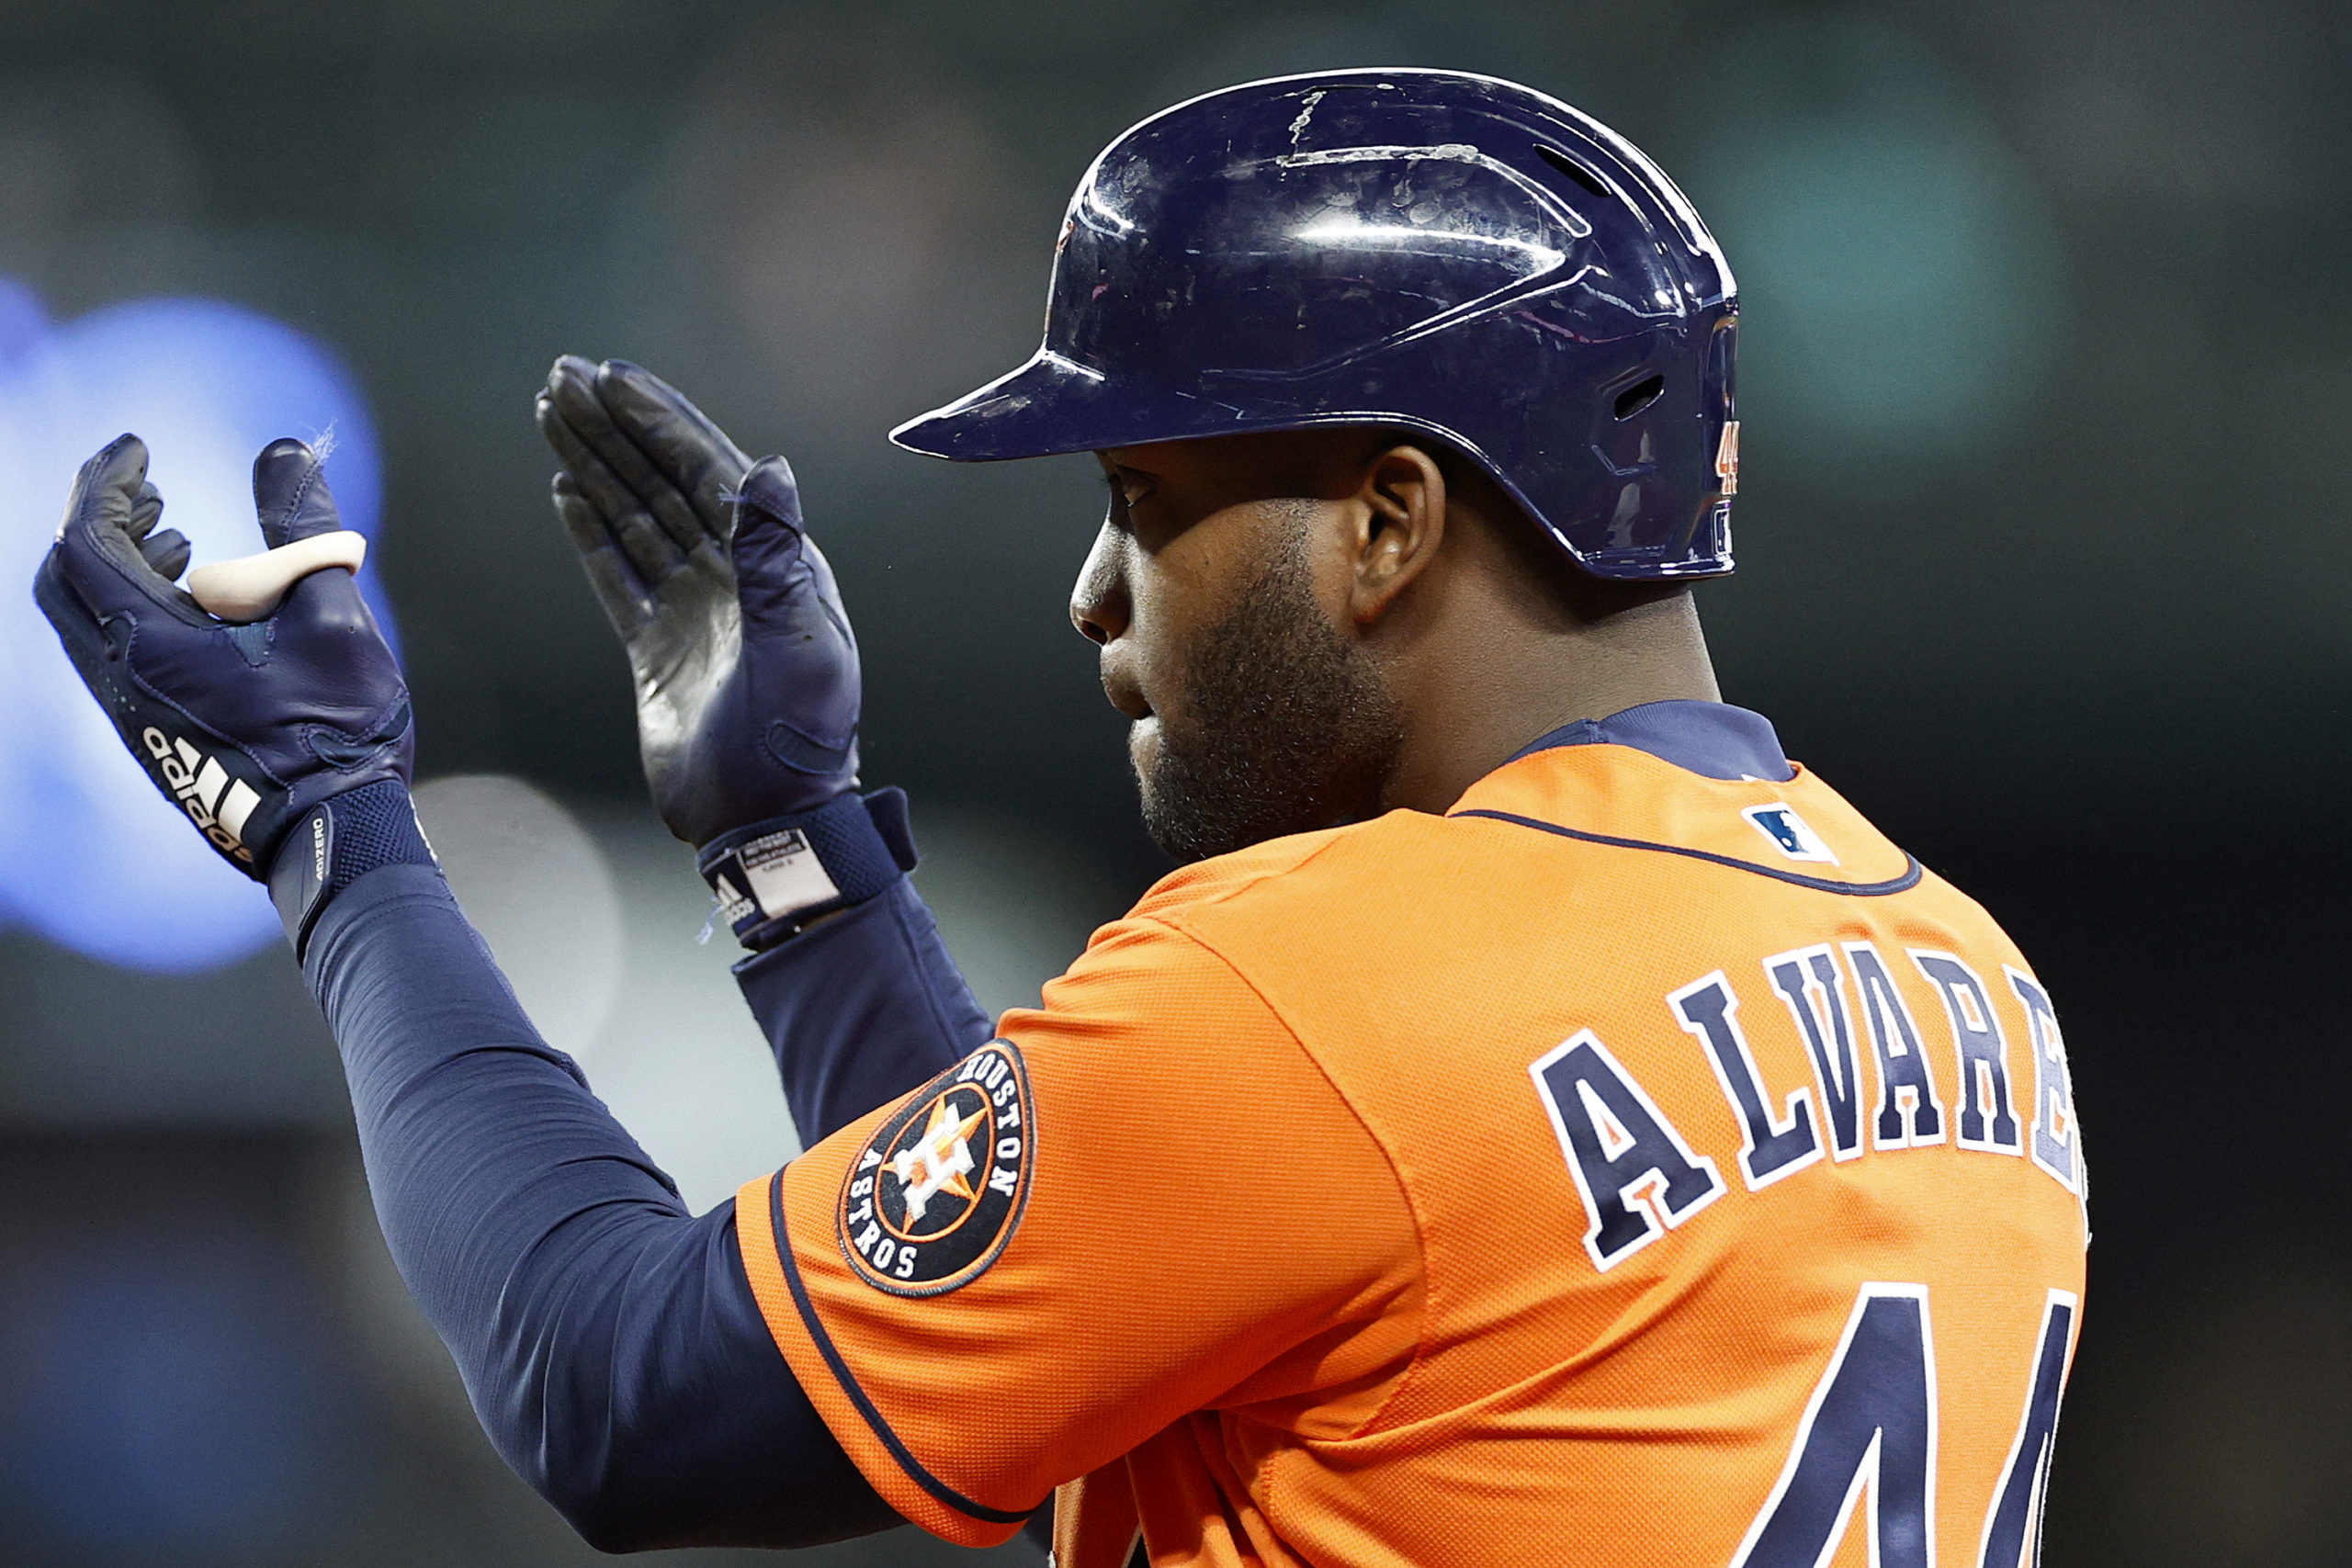 Houston Astros: Yordan Alvarez adjusting swing in World Series